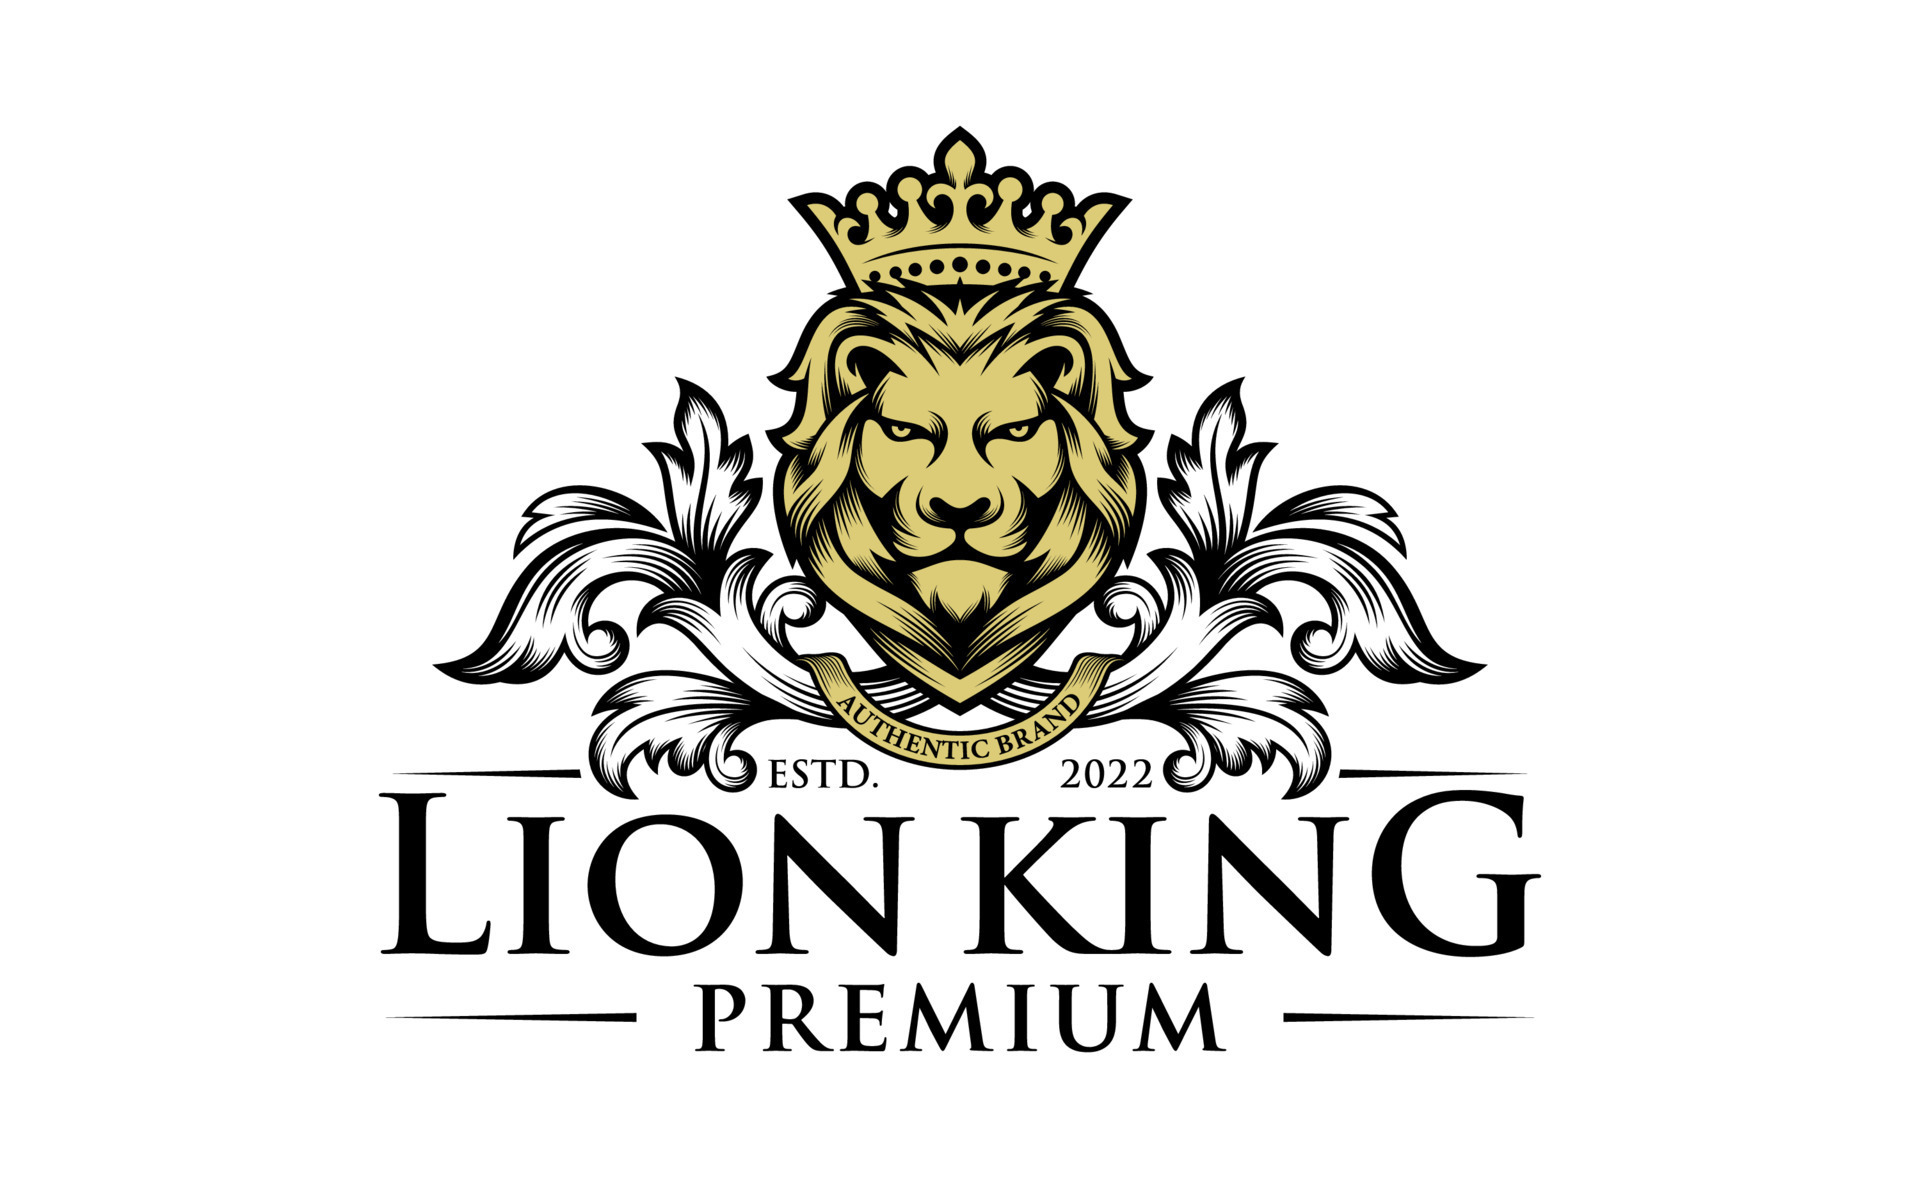 Royal king lion crown symbols. Elegant gold Leo animal logo. Premium luxury  brand identity icon. Vector illustration. 17485095 Vector Art at Vecteezy